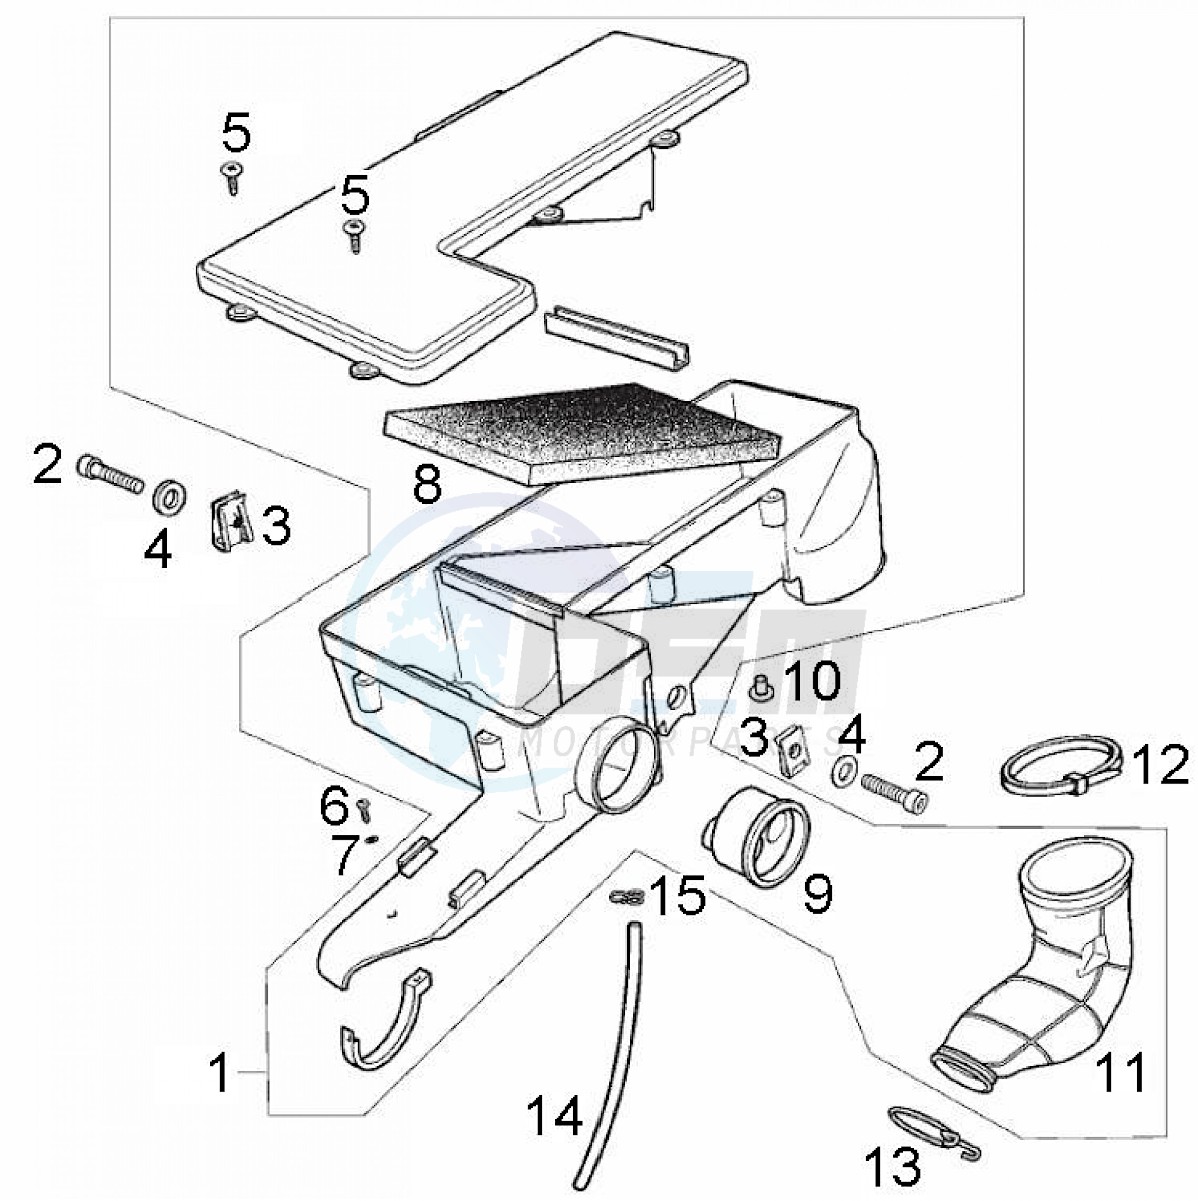 Air box (Positions) blueprint